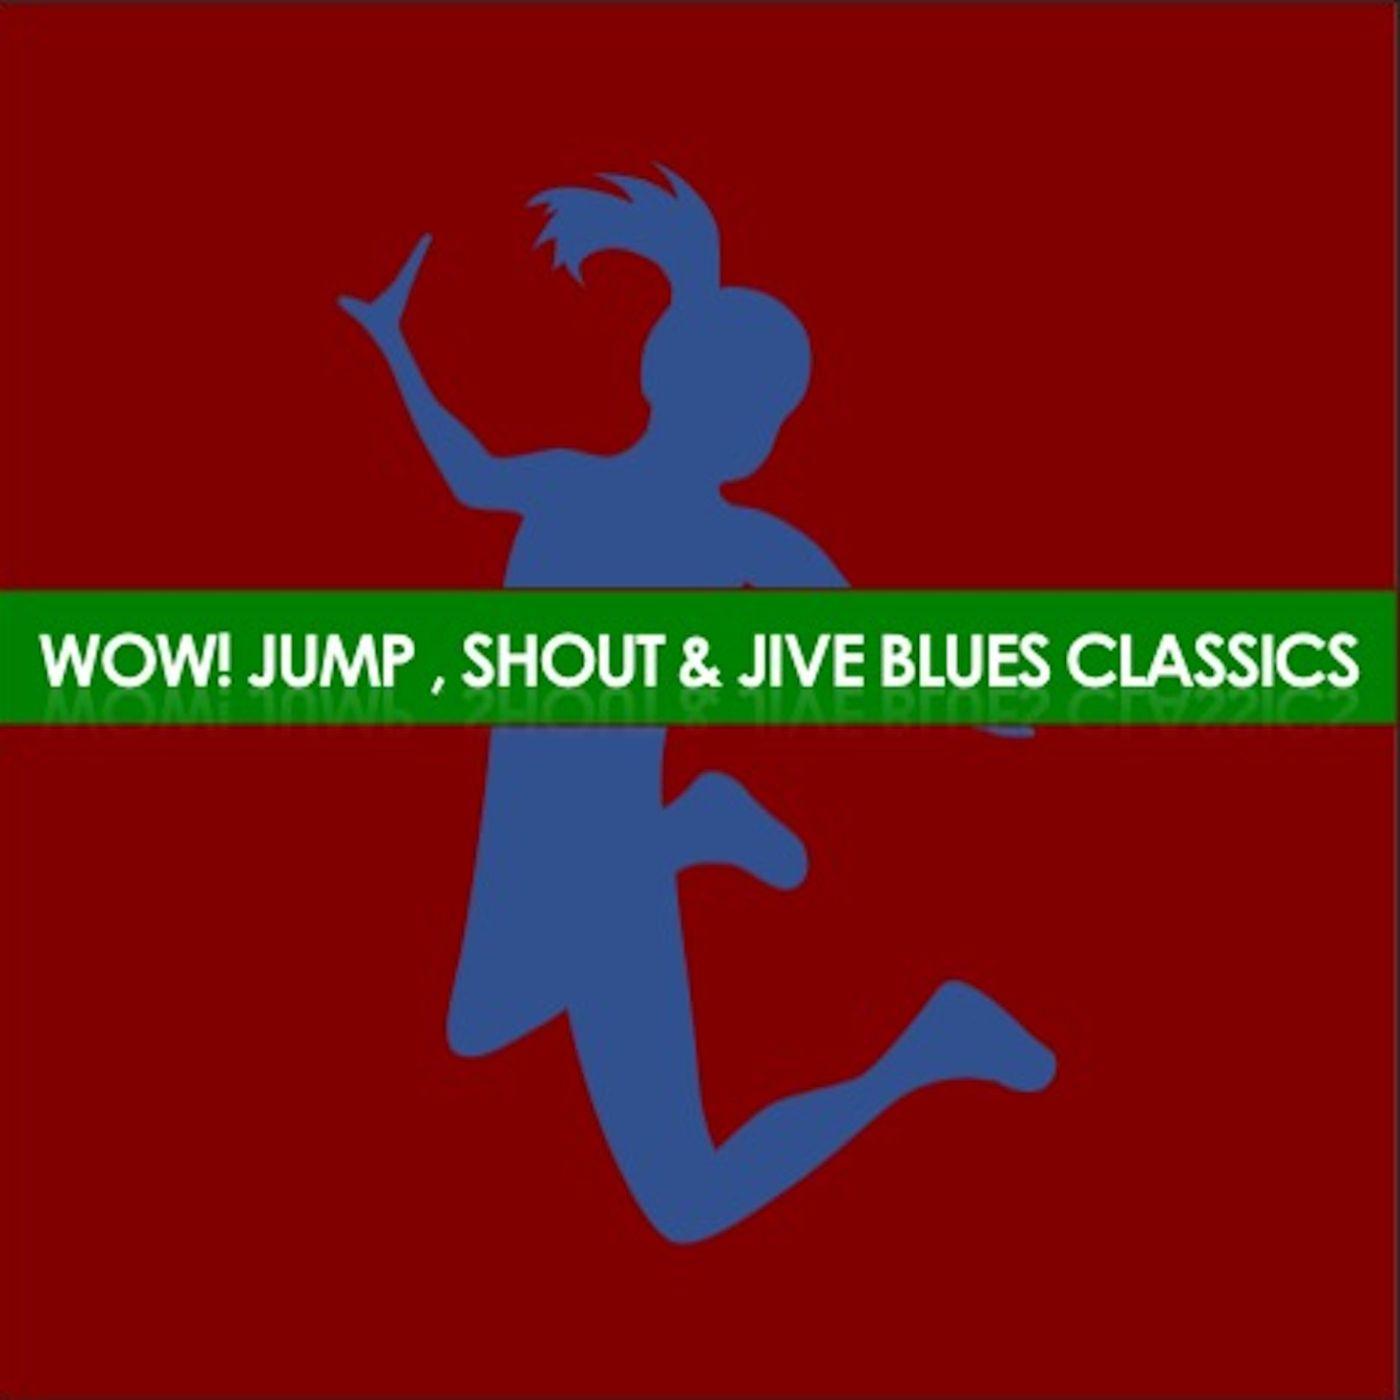 Wow! Jump, Shout & Jive: Blues Classics